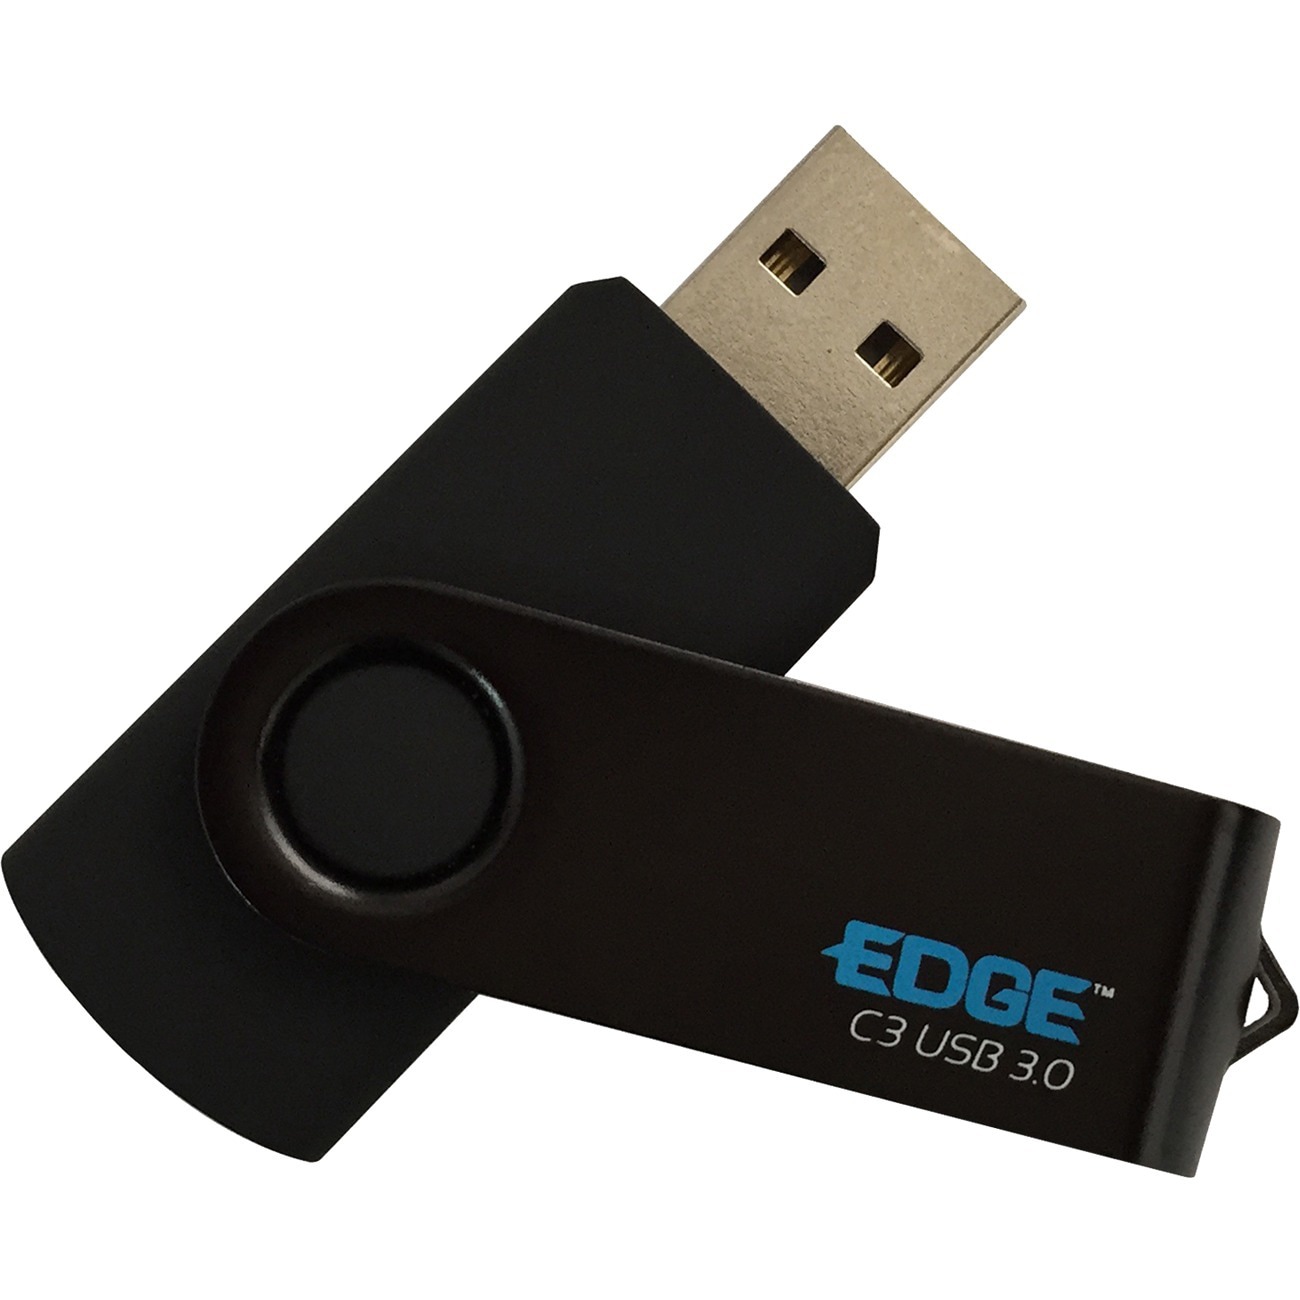 EDGE C3 - USB flash drive - 32 GB